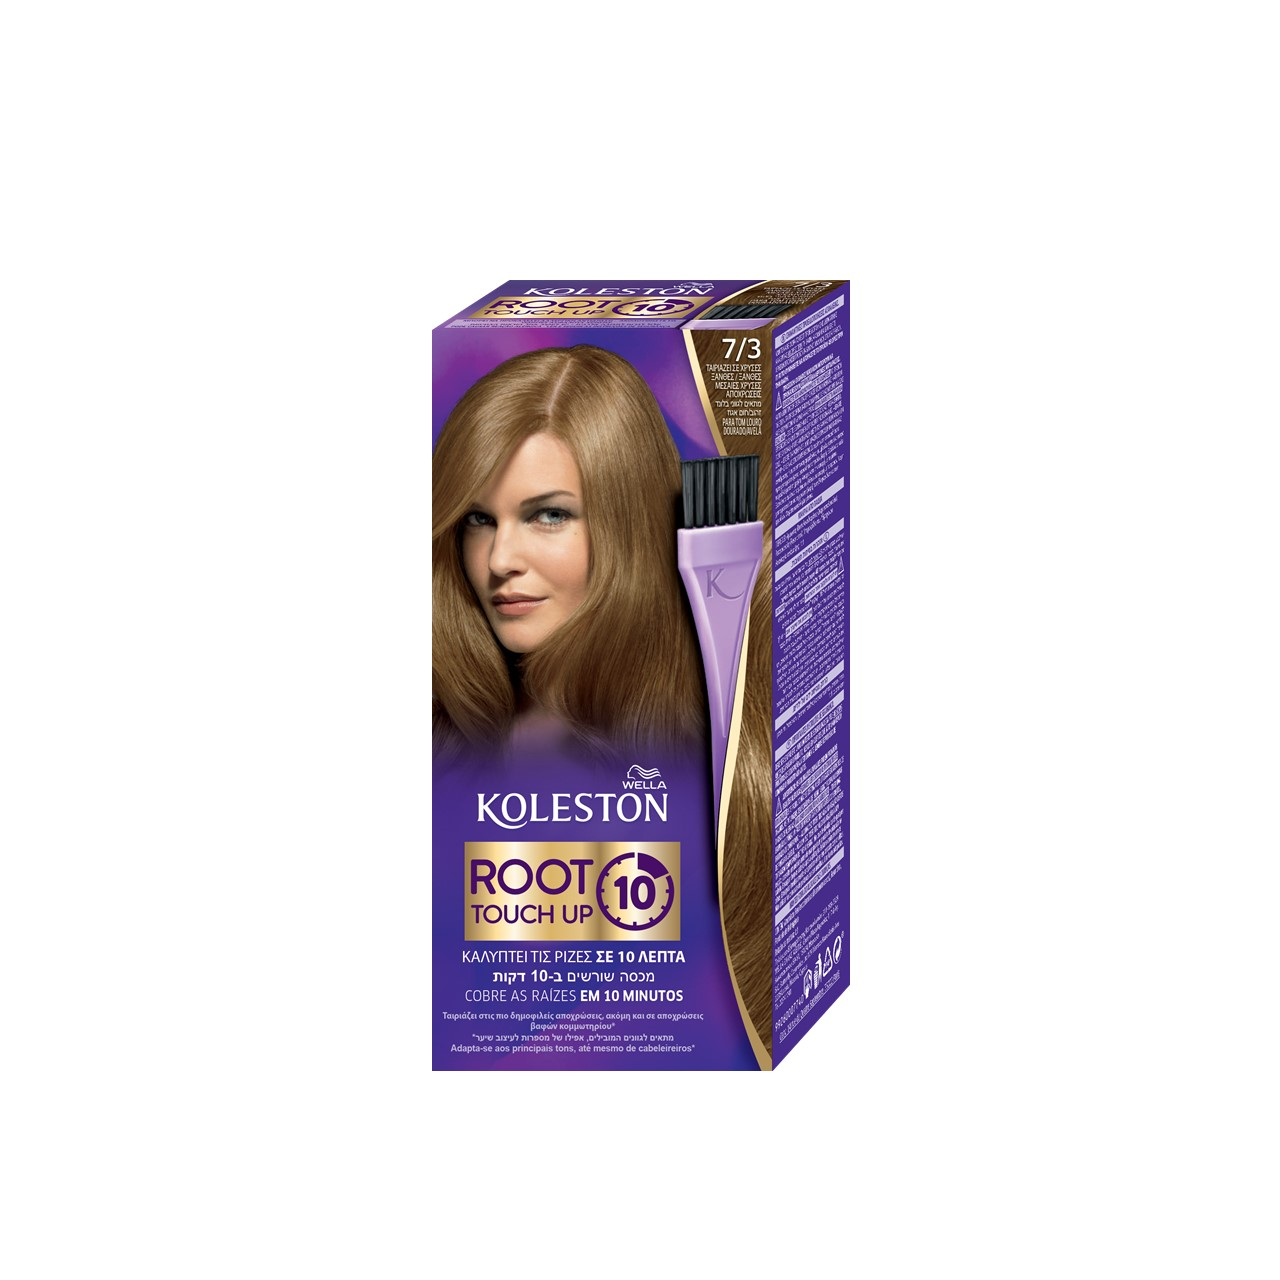 Wella Koleston Root Touch Up 10 Minutes 7/3 Permanent Hair Dye